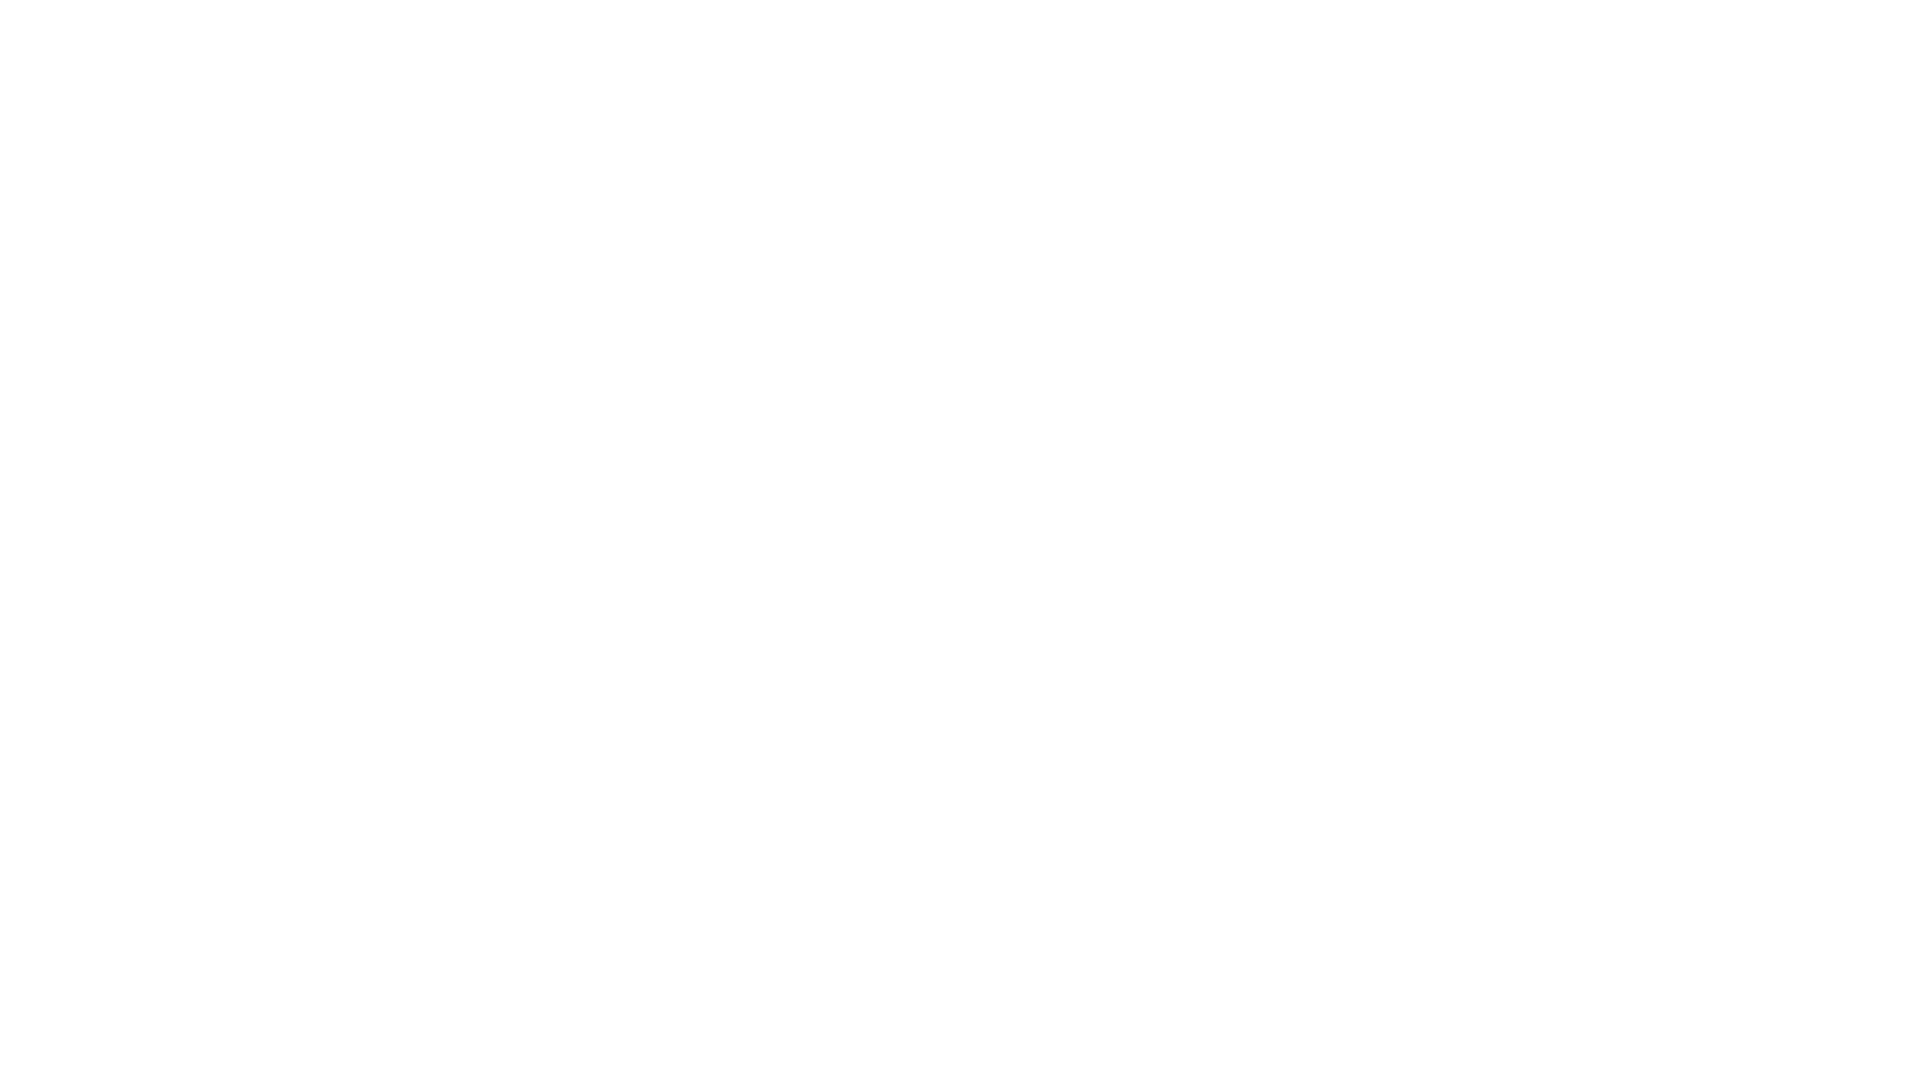 Get Heard! Publishing House